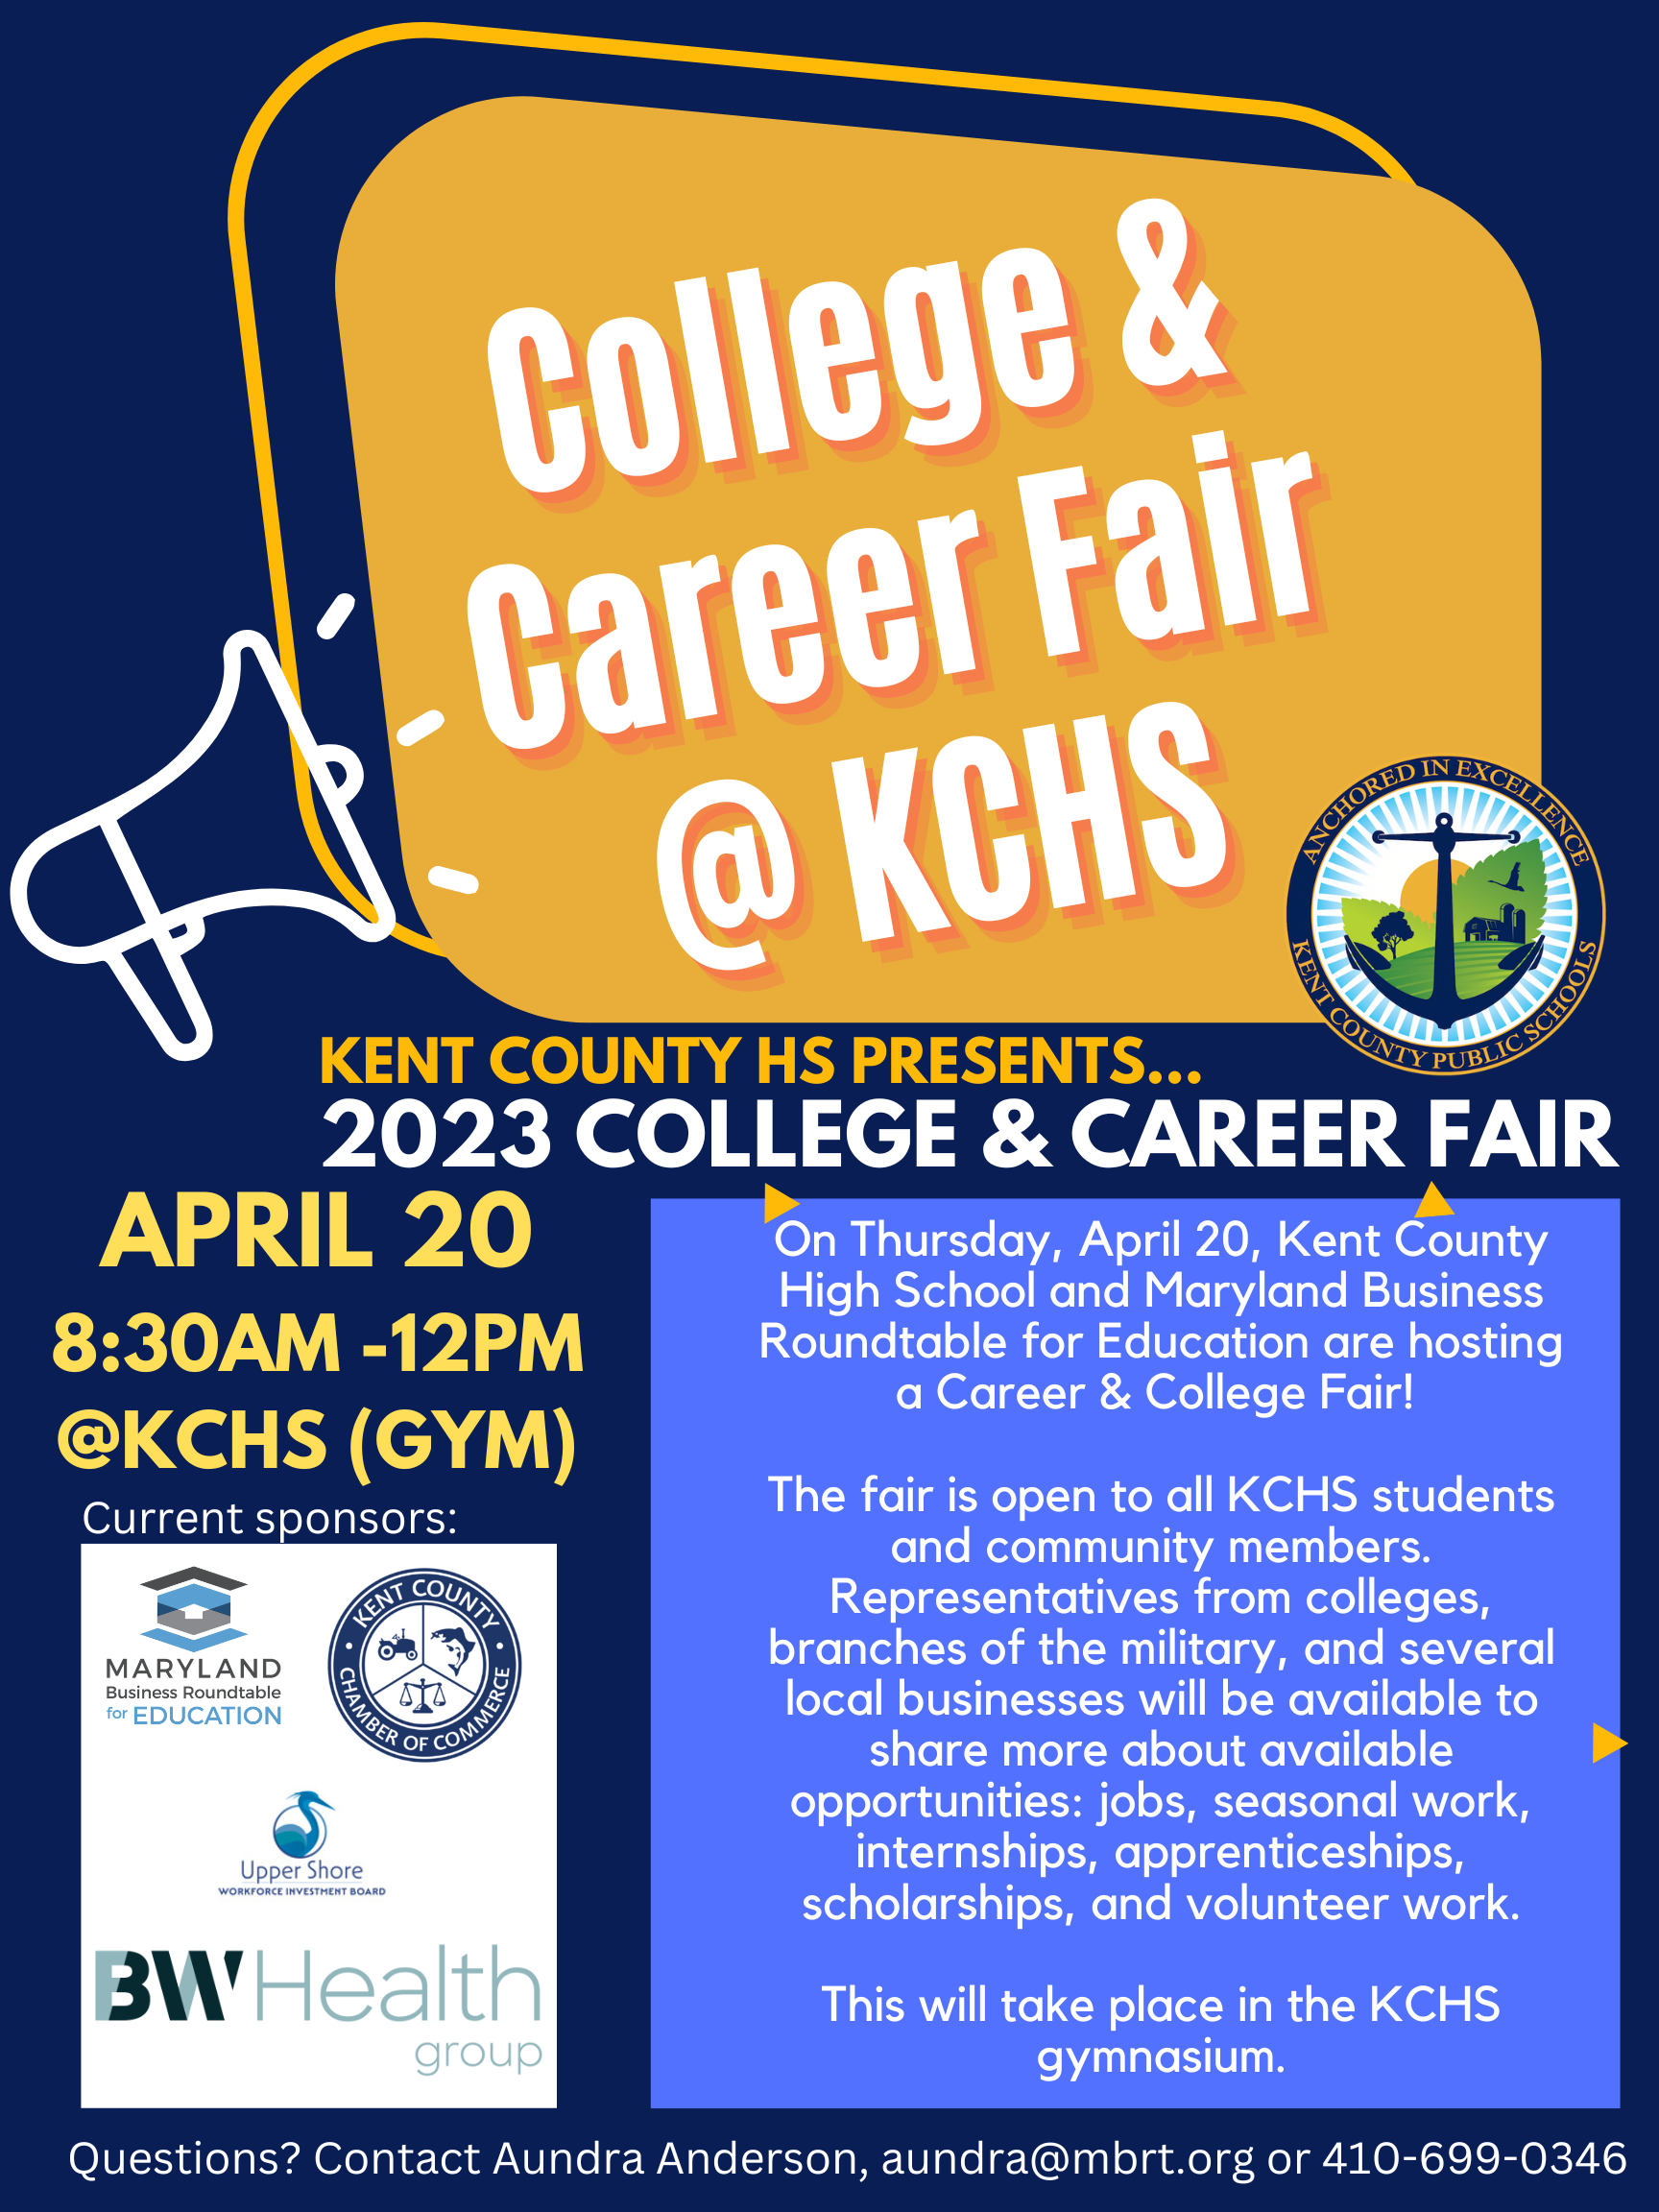 College & Career Fair at Kent County High School